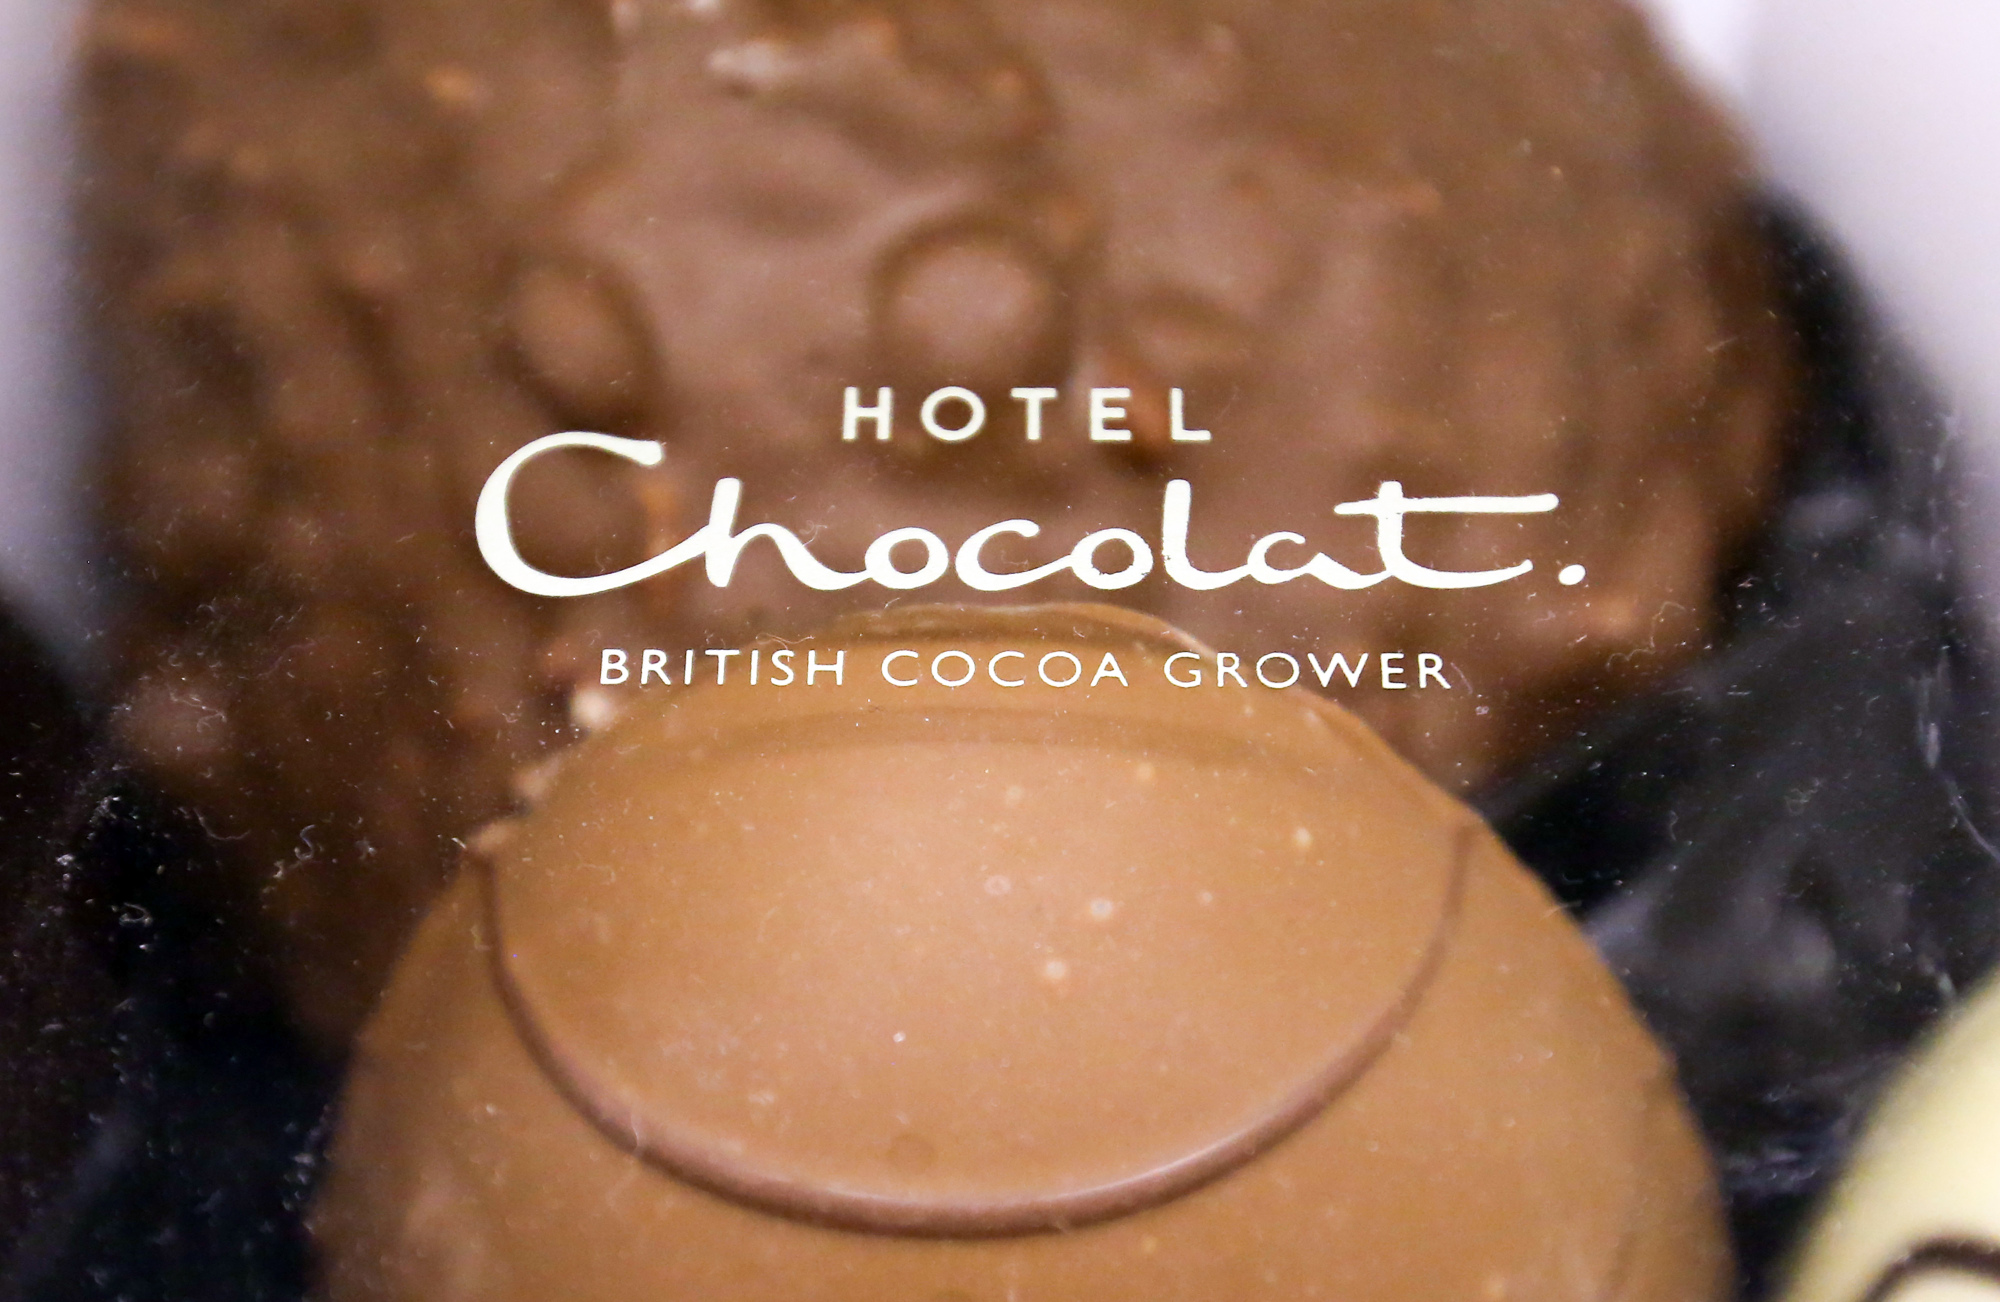 Maltesers Chocolate China Trade,Buy China Direct From Maltesers Chocolate  Factories at